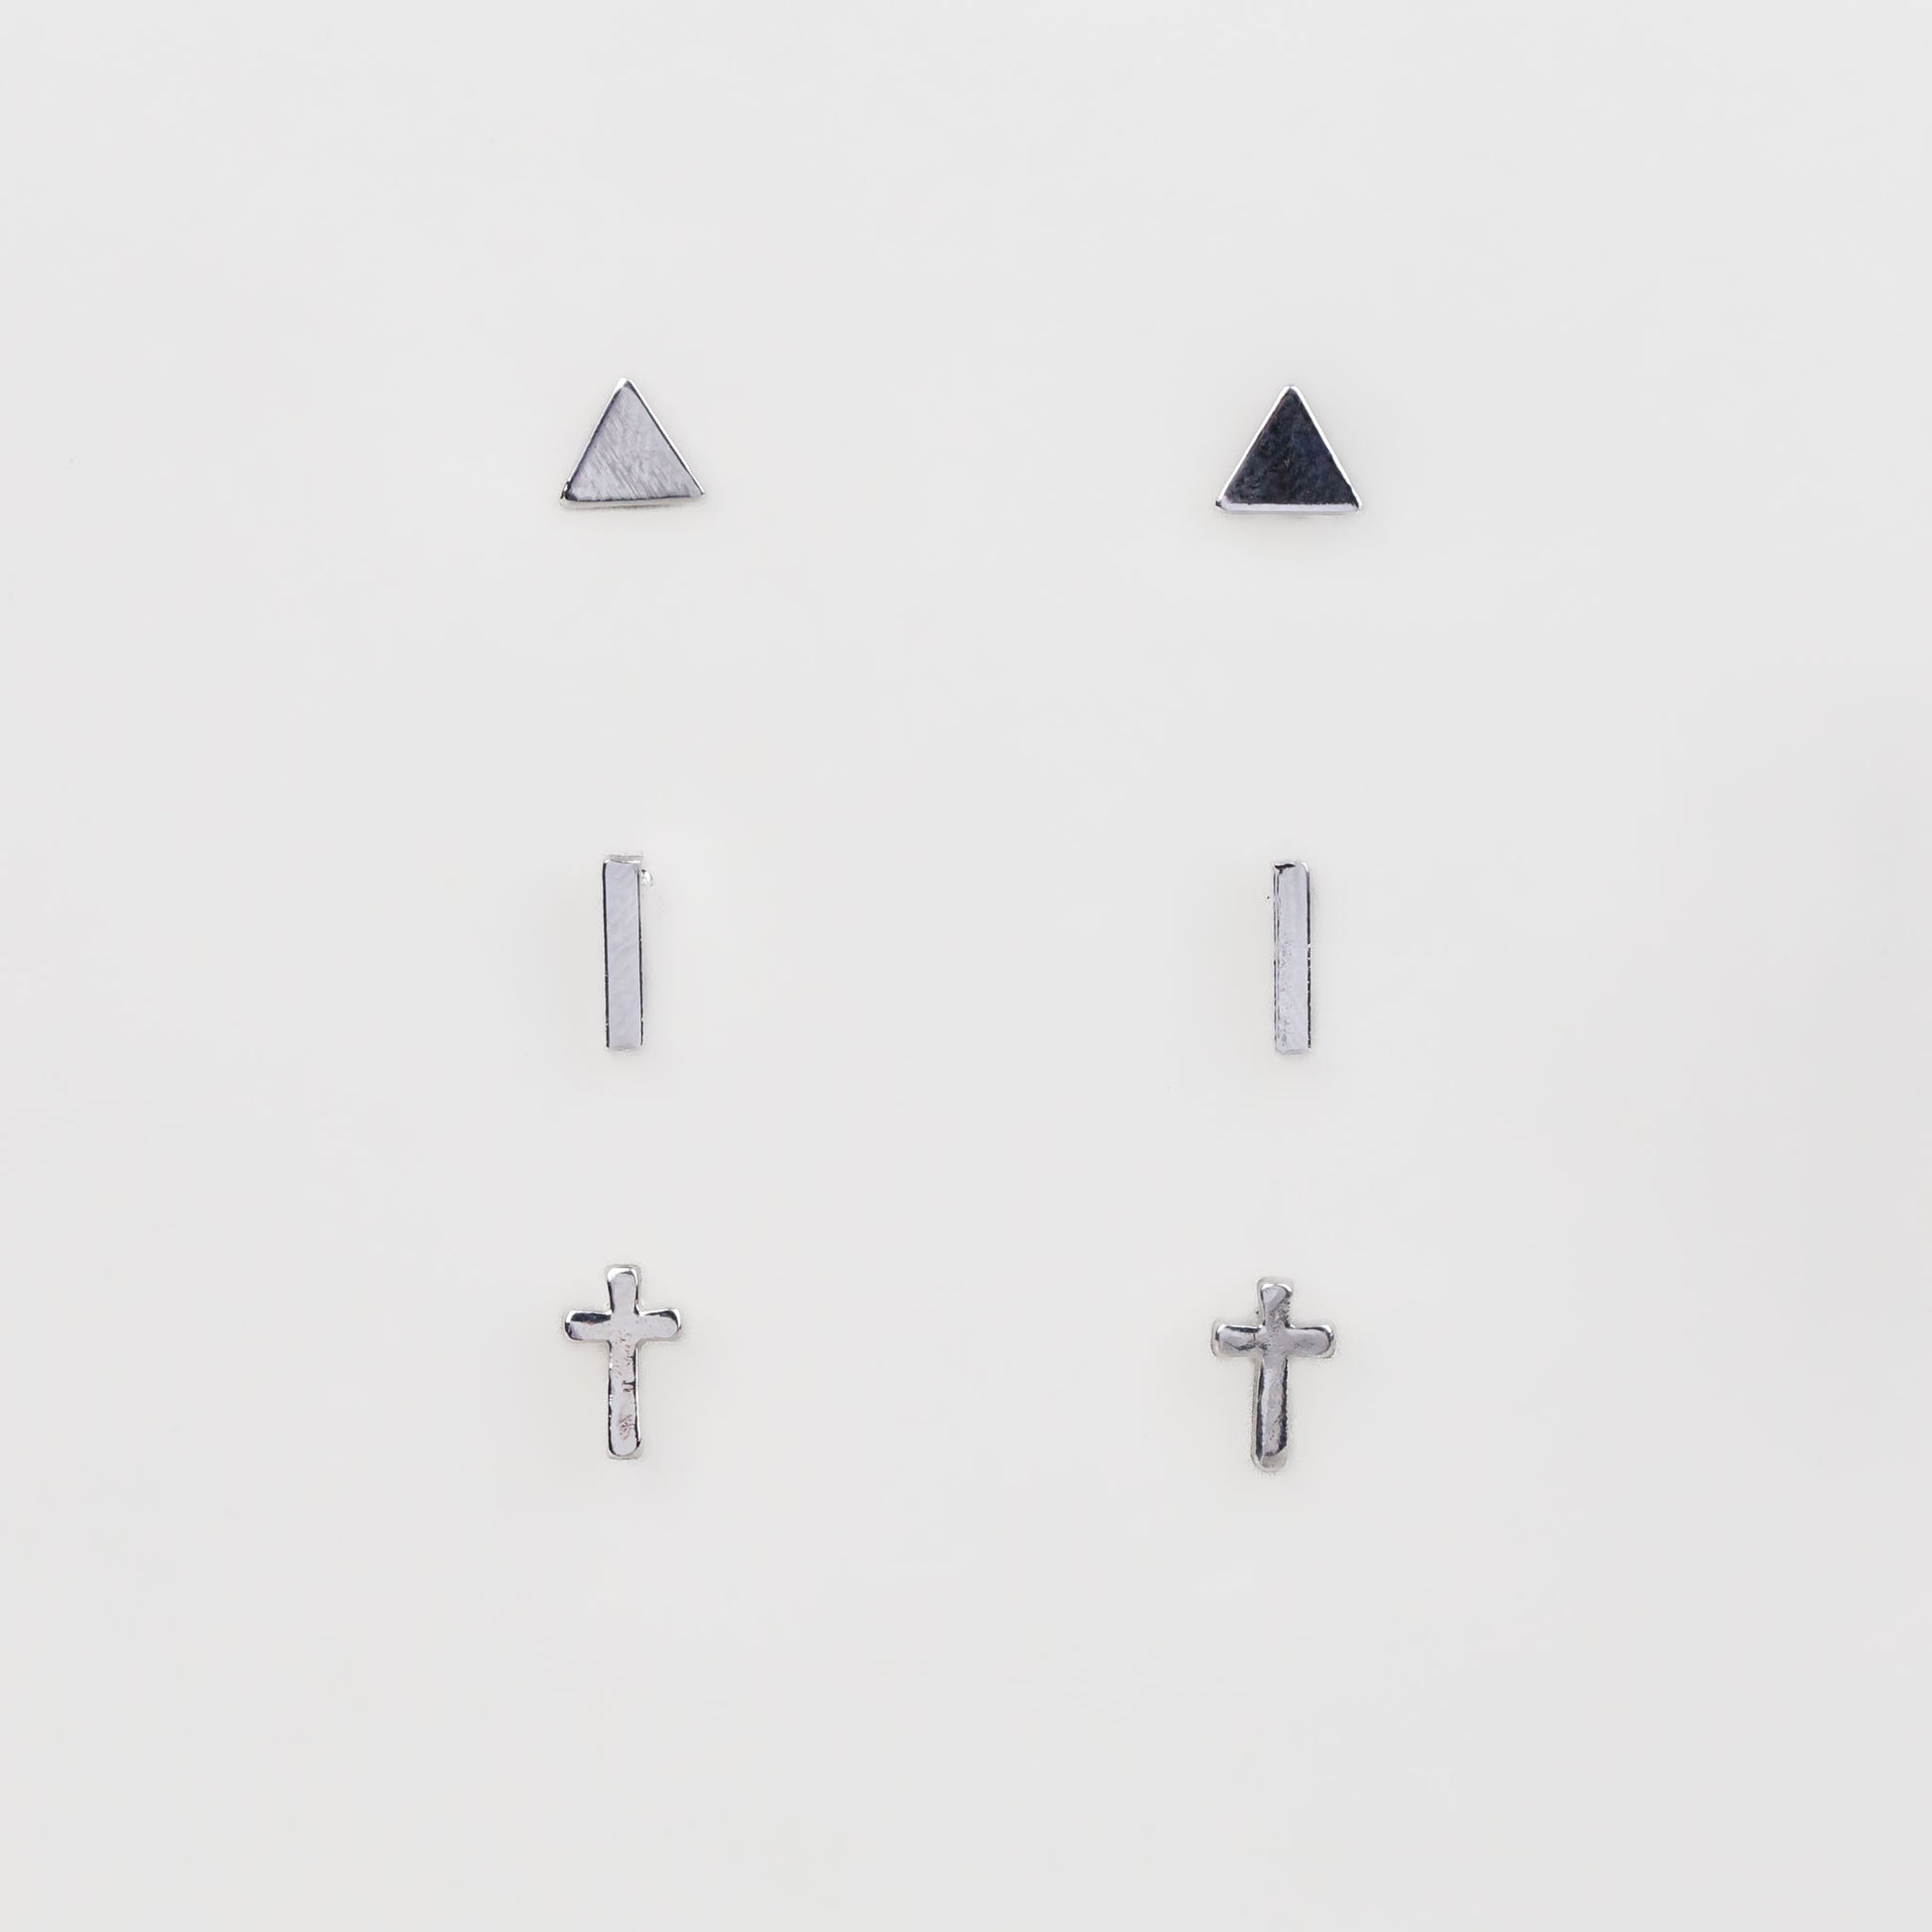 Cercei mici cu forme geometrice și cruce, set 3 perechi - Argintiu